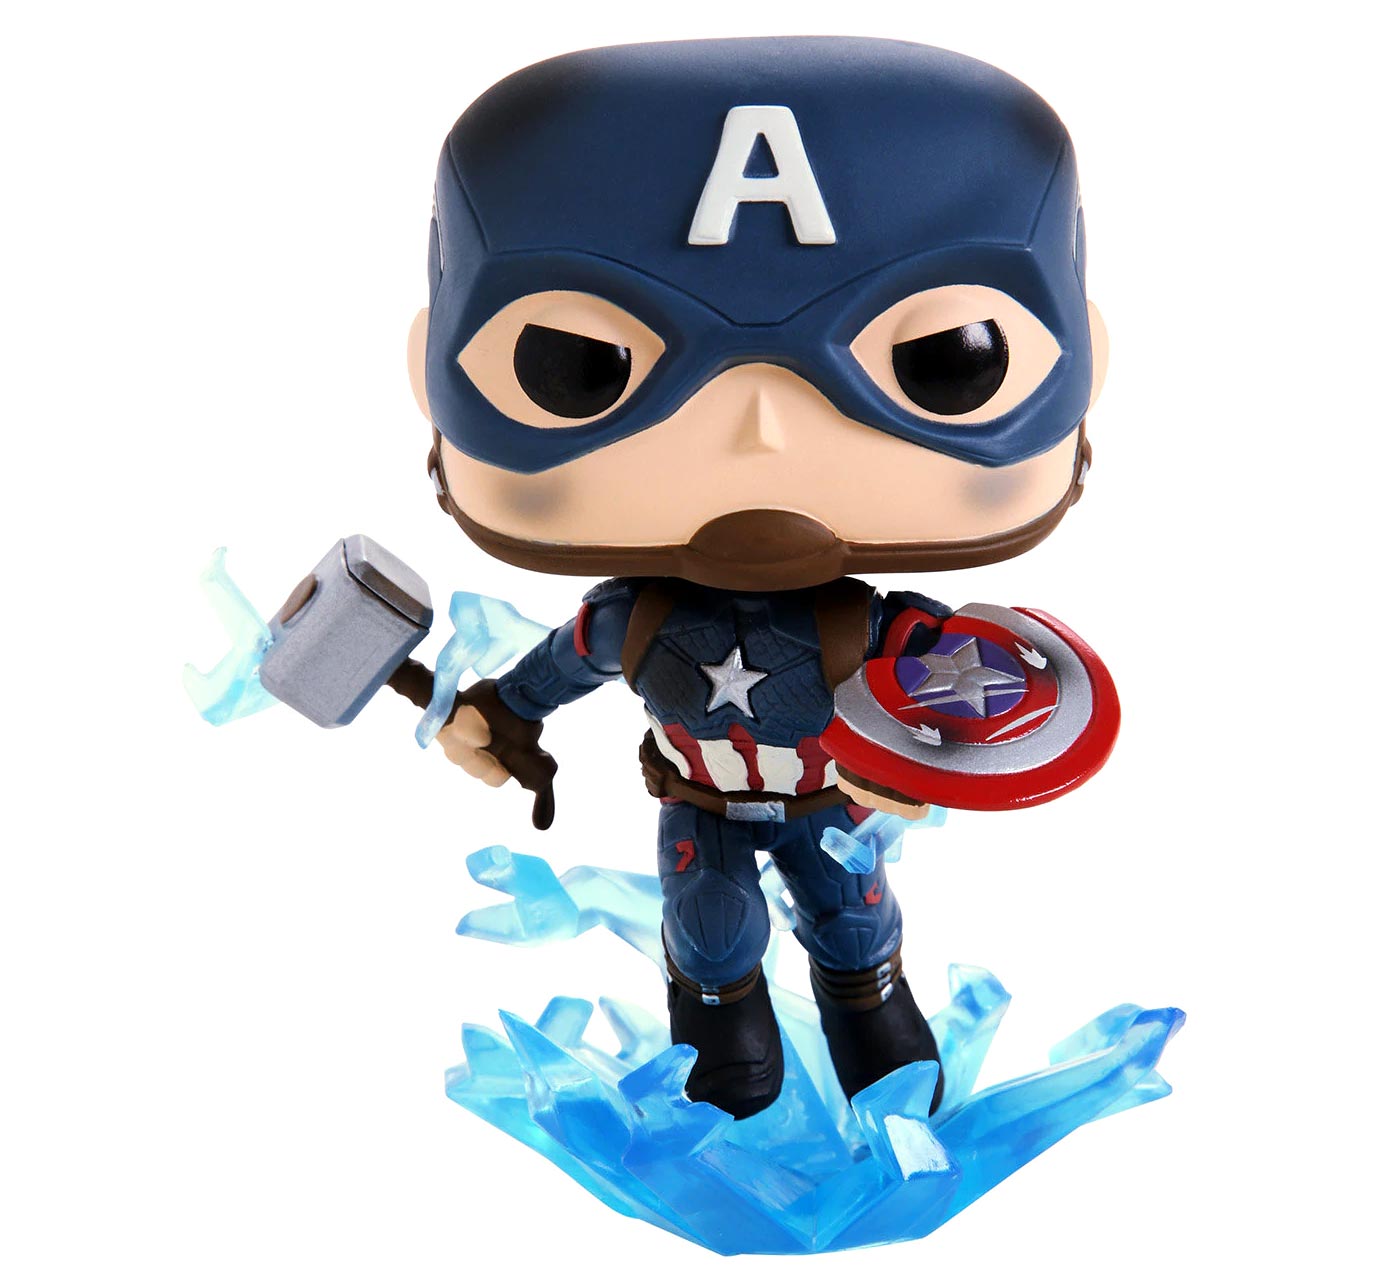 https://www.geekalerts.com/u/Funko-Pop-Avengers-Endgame-Captain-America-Mjolnir-Figure.jpg